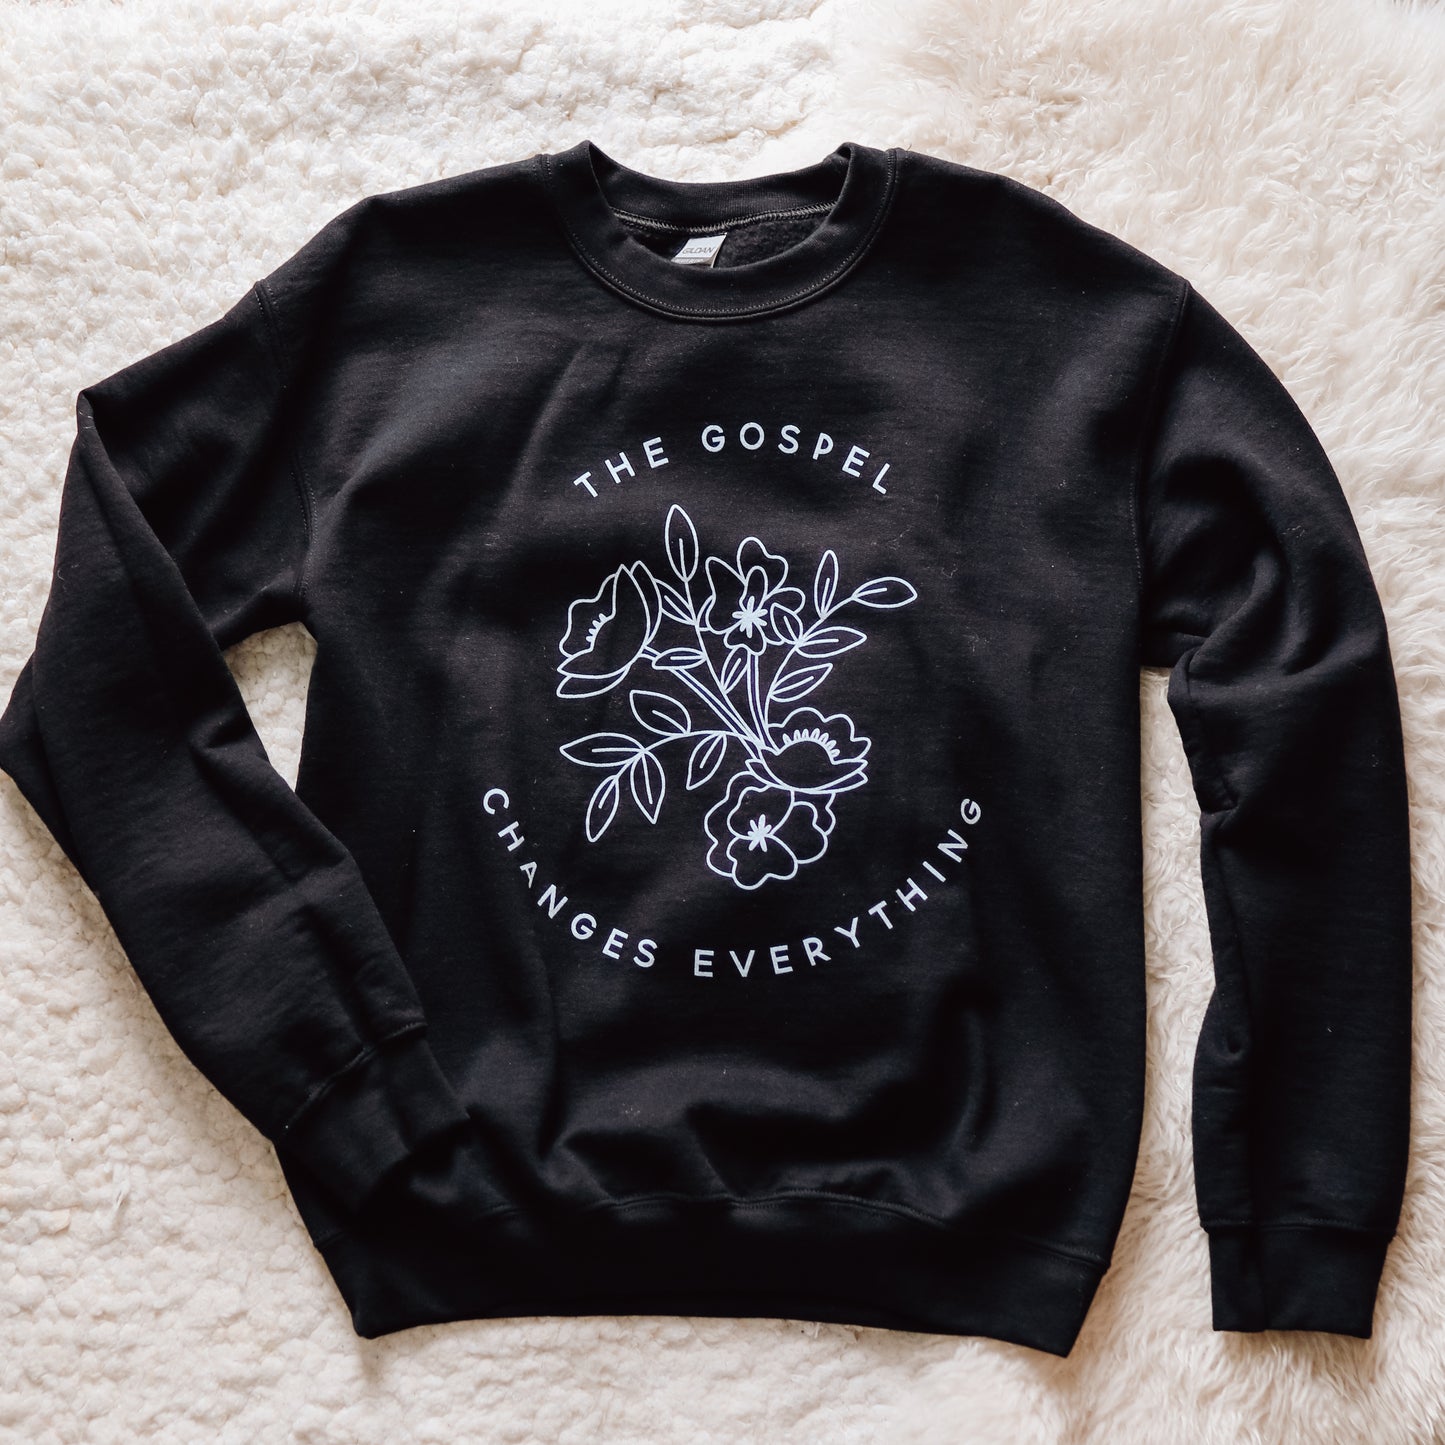 The Gospel Changes Everything Sweatshirt - Black